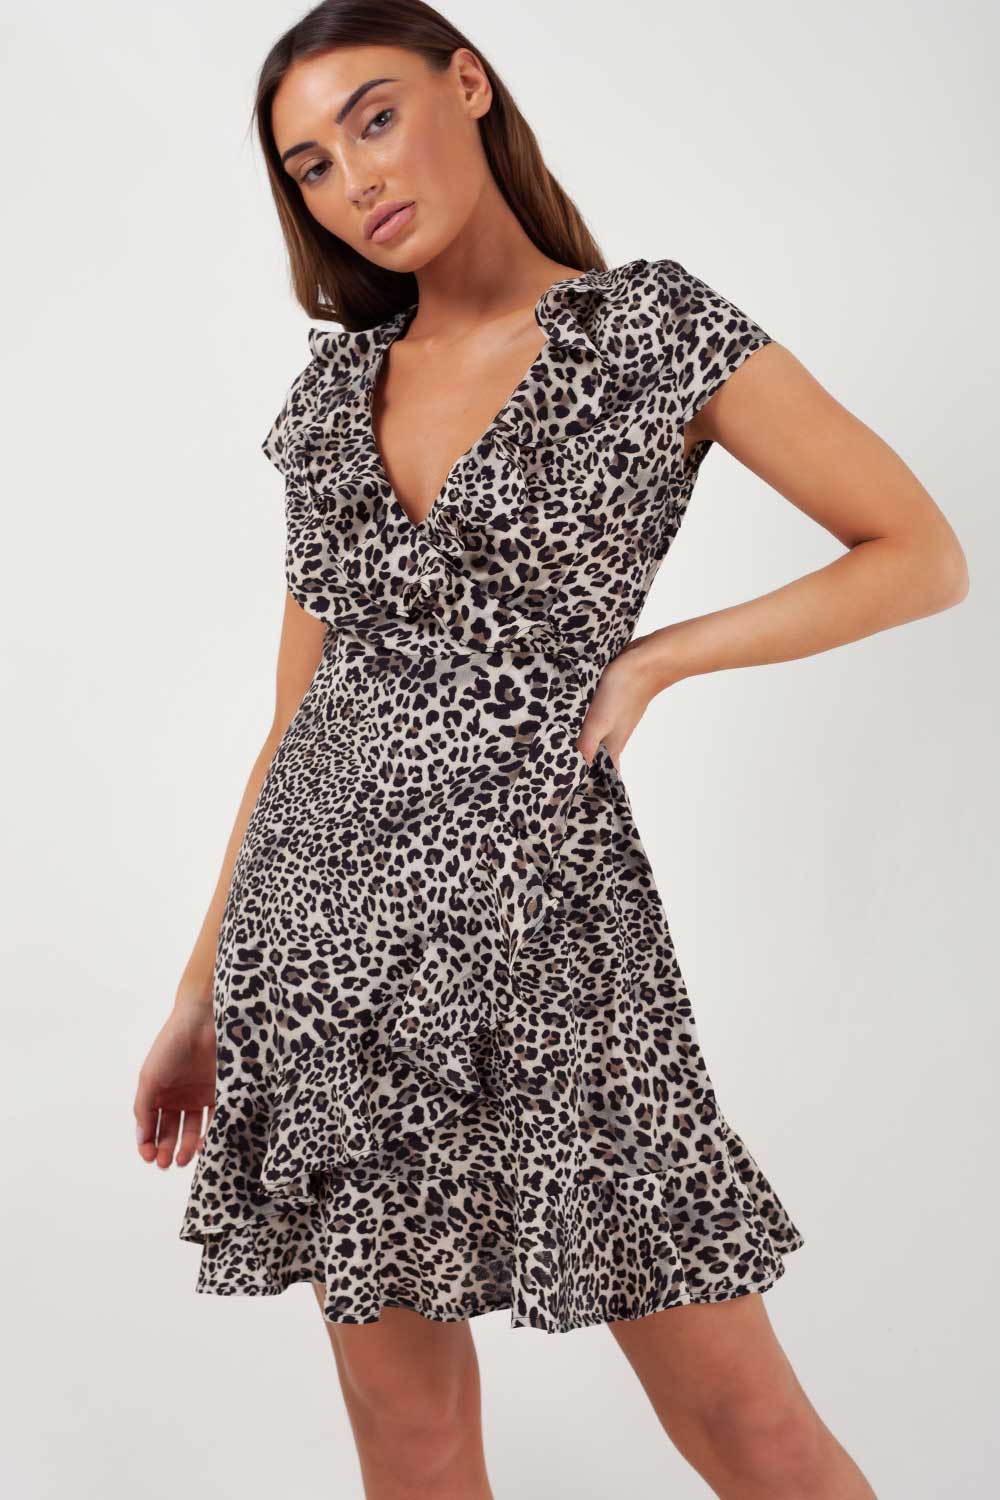 leopard print wrap dress uk size 18 